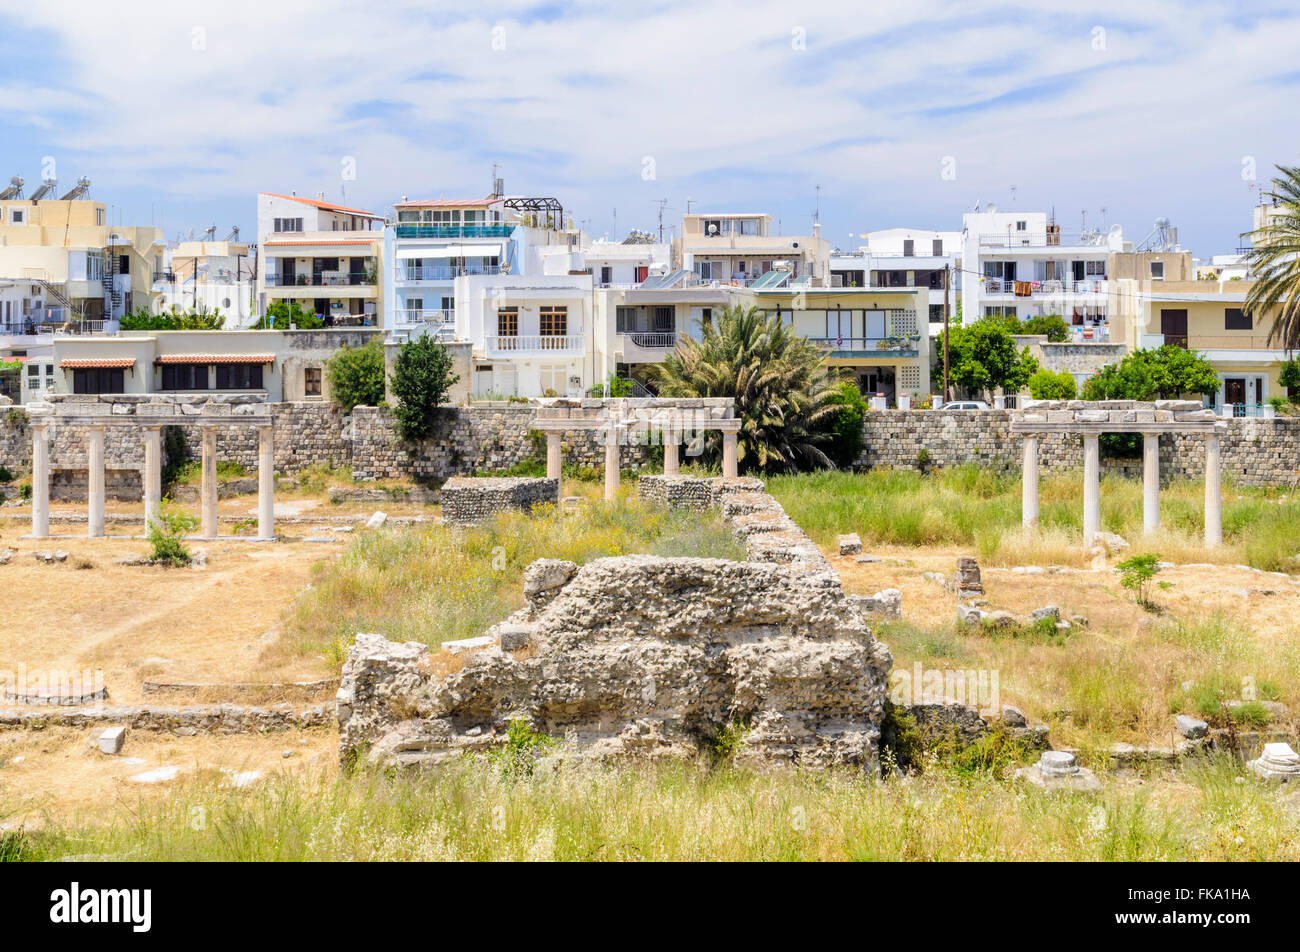 Encroaching urban sprawl of Kos Town overlooking the Ancient Agora archaeological site, Kos Town, Greece Stock Photo